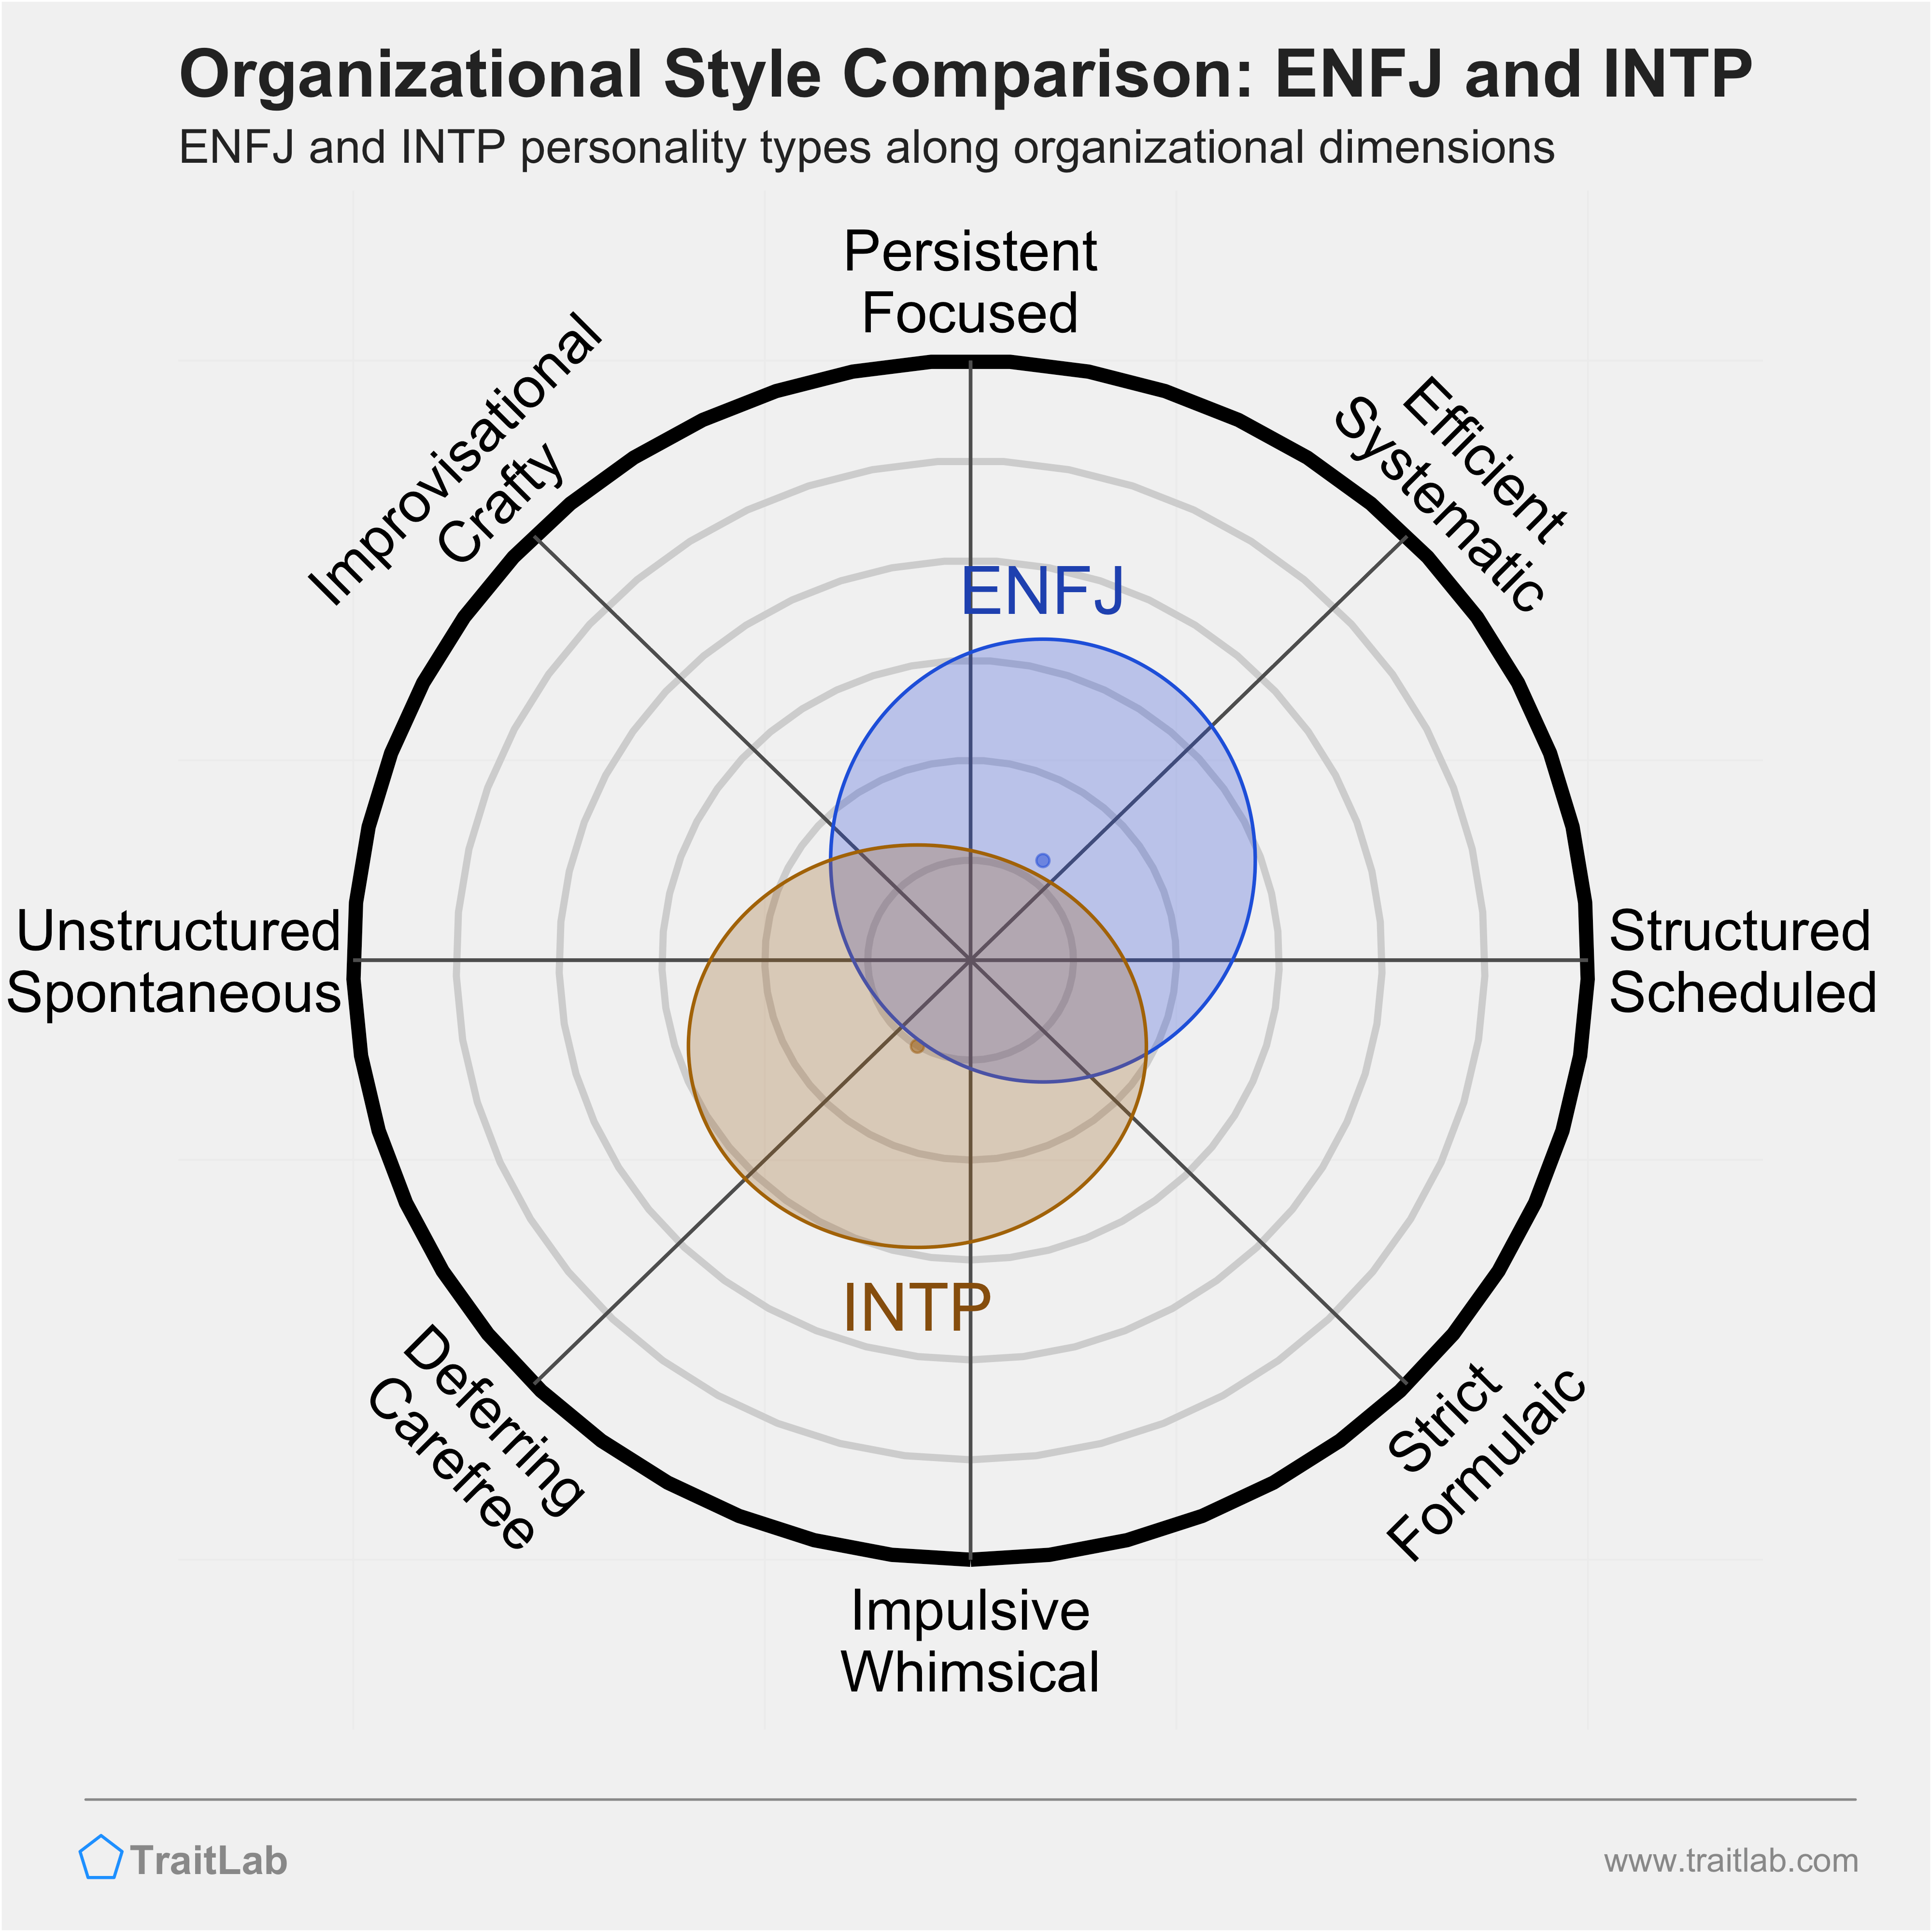 ENFJ and INTP comparison across organizational dimensions